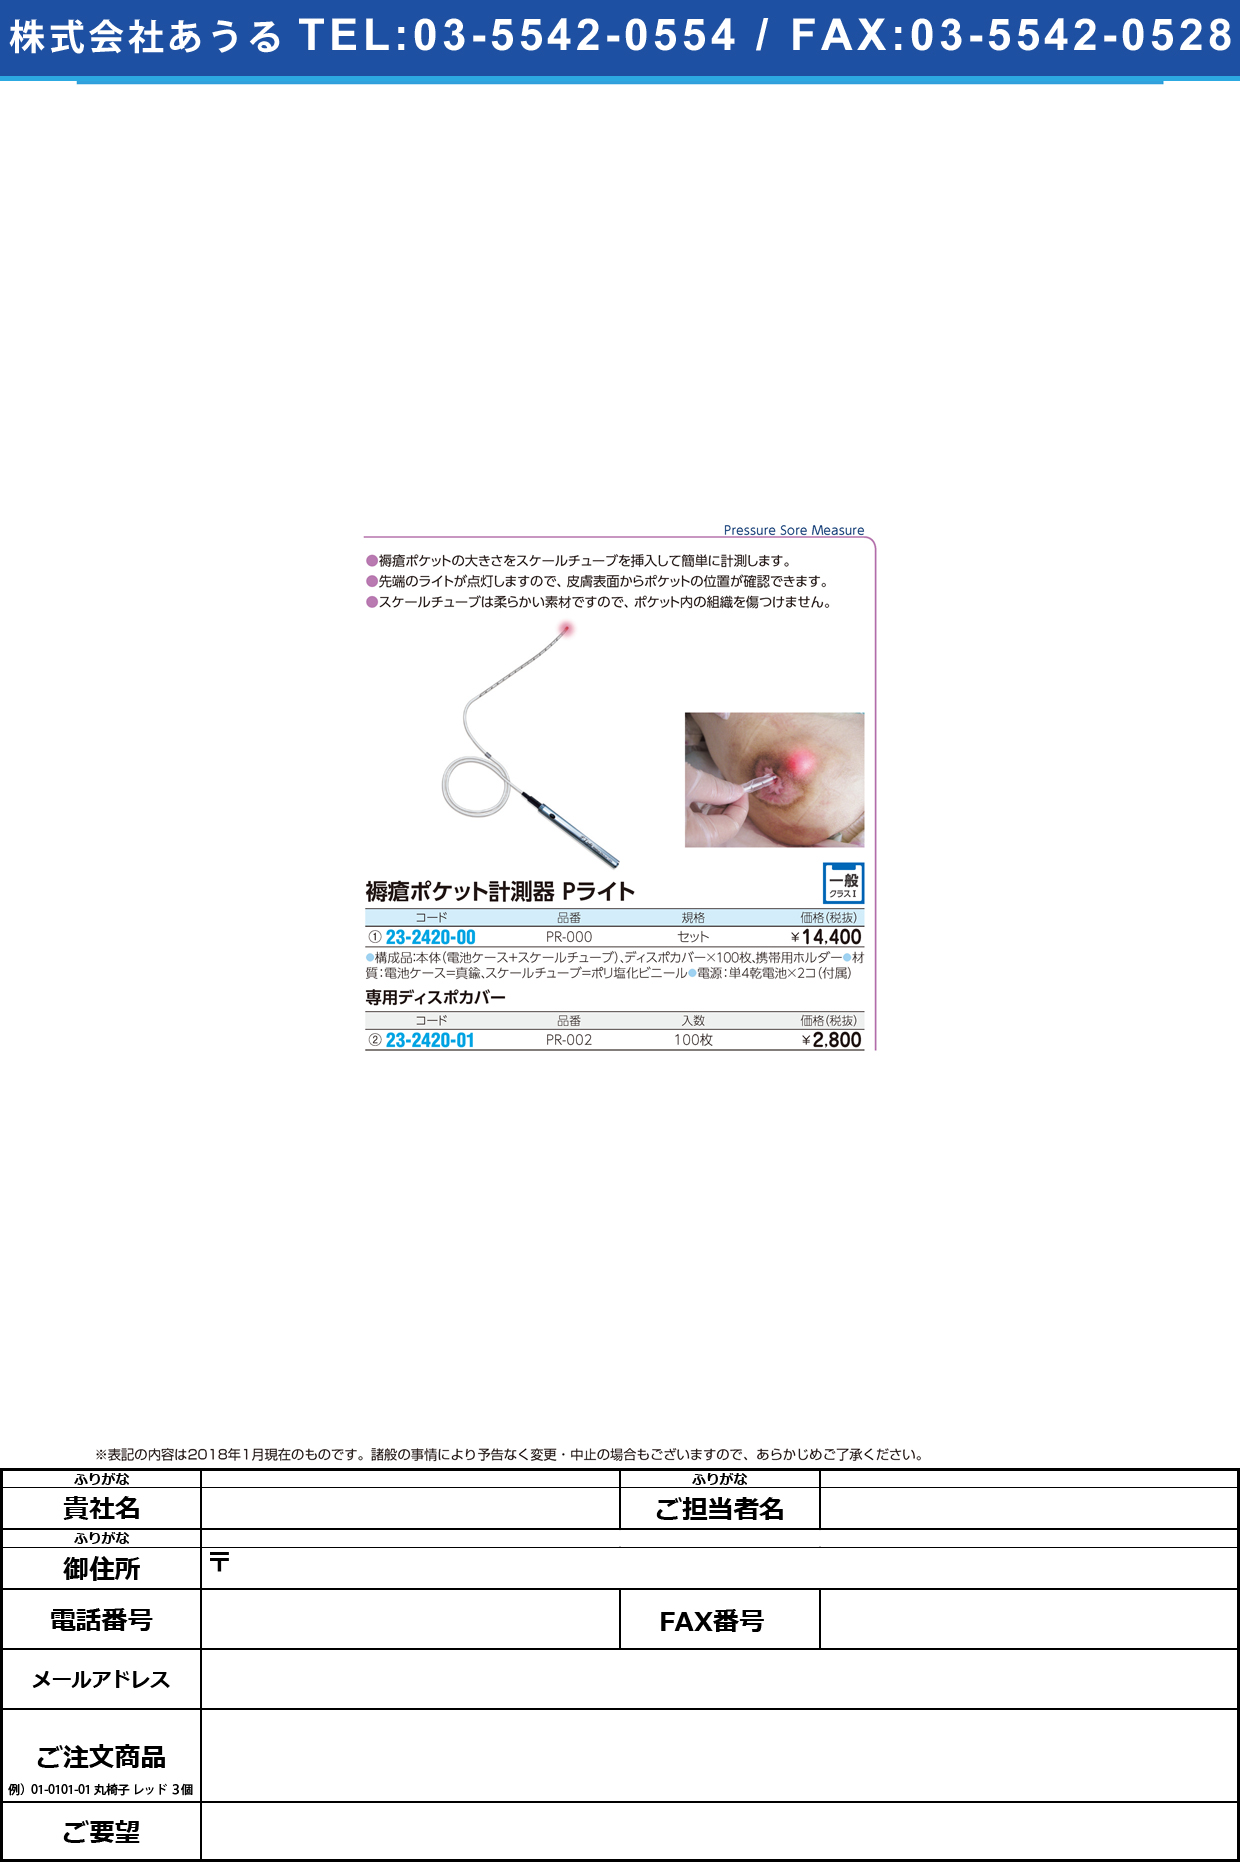 (23-2420-01)Ｐライト用ディスポカバー PR-002(100ｲﾘ) Pﾗｲﾄﾖｳﾃﾞｨｽﾎﾟｶﾊﾞｰ【1箱単位】【2019年カタログ商品】